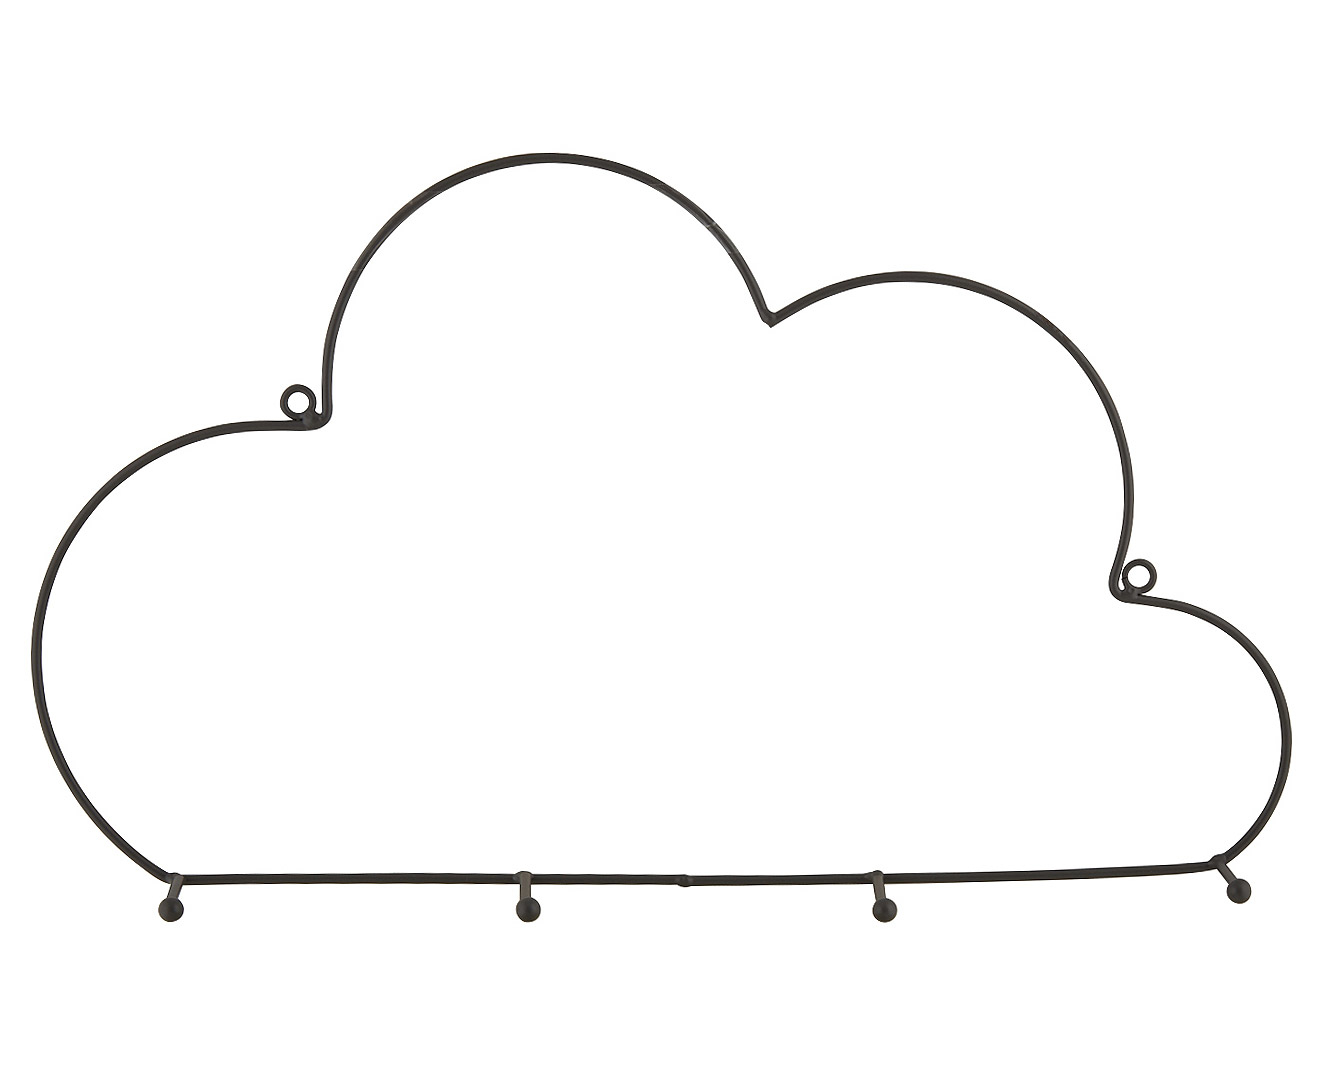 Kids Concepts Cloud Wall Rack - Grey